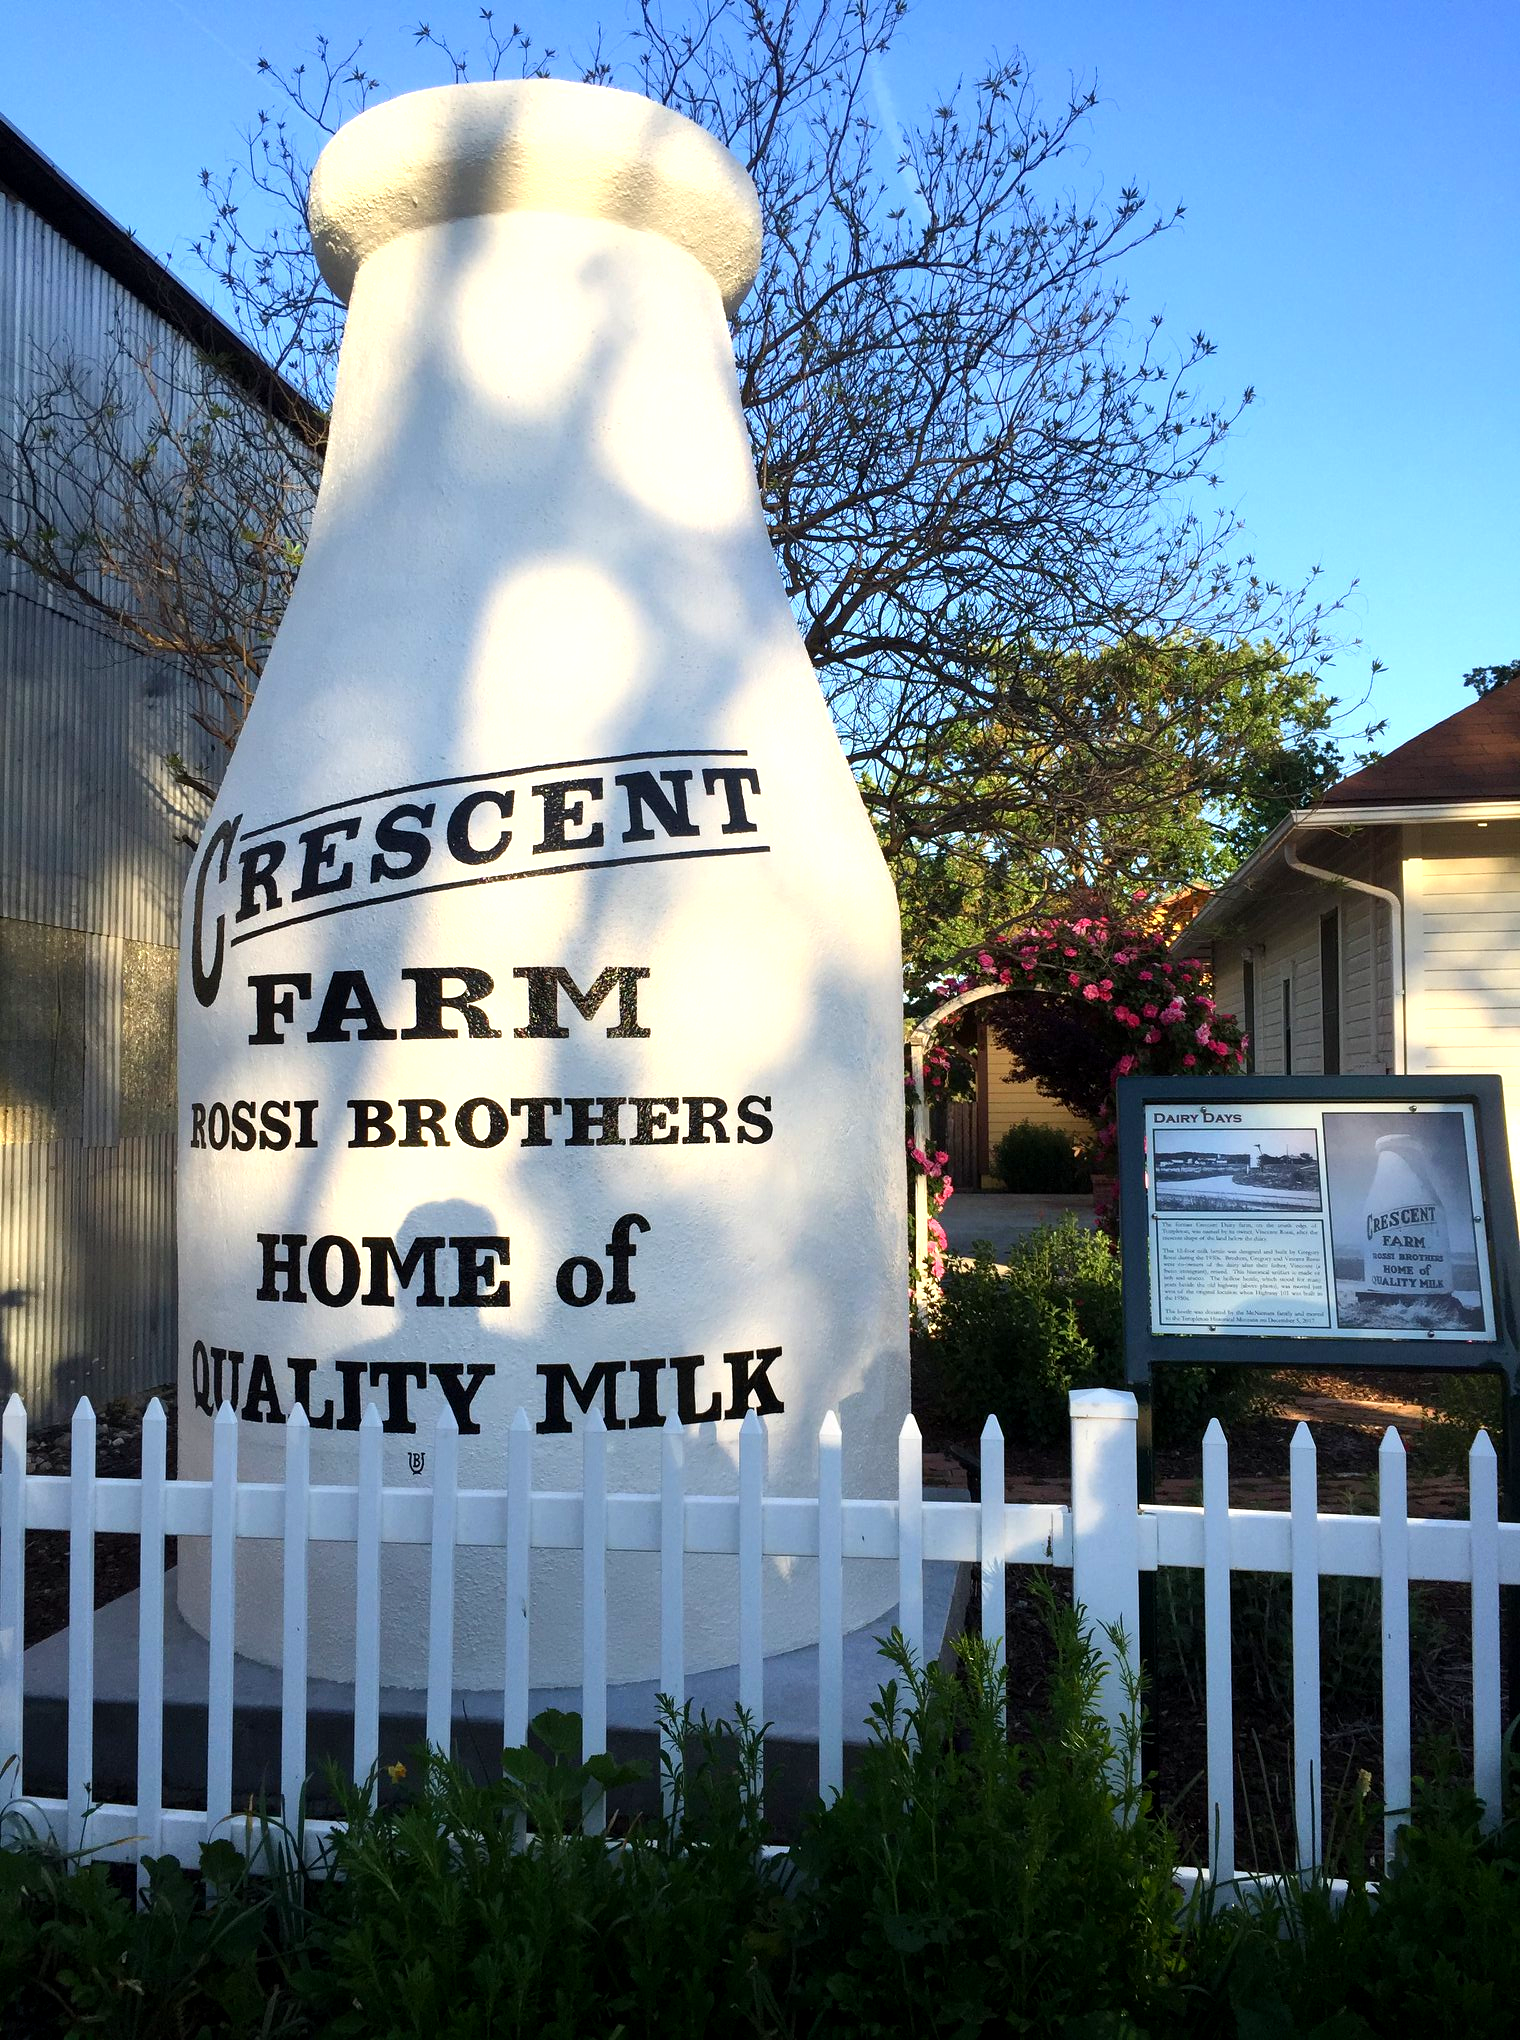 World's Largest Historic Milk Bottle Sculpture: world record set in Templeton, California